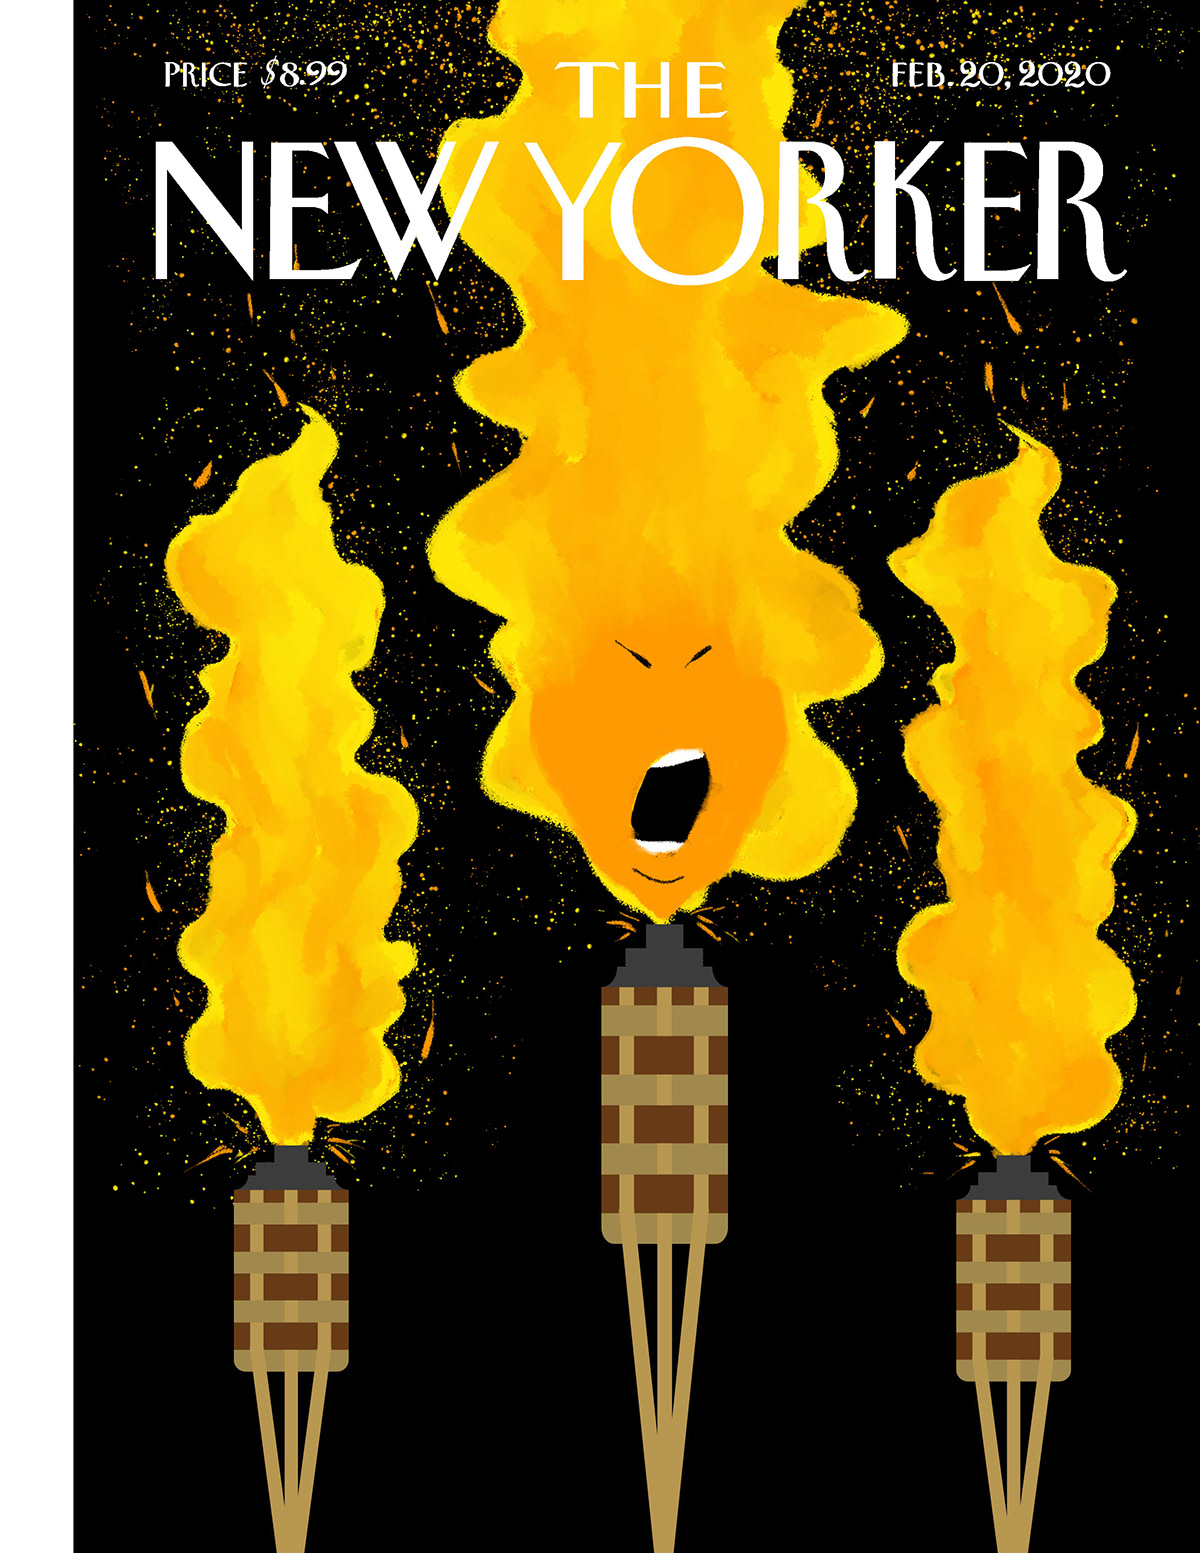 Digital Art  ILLUSTRATION  Magazine Cover political The New Yorker